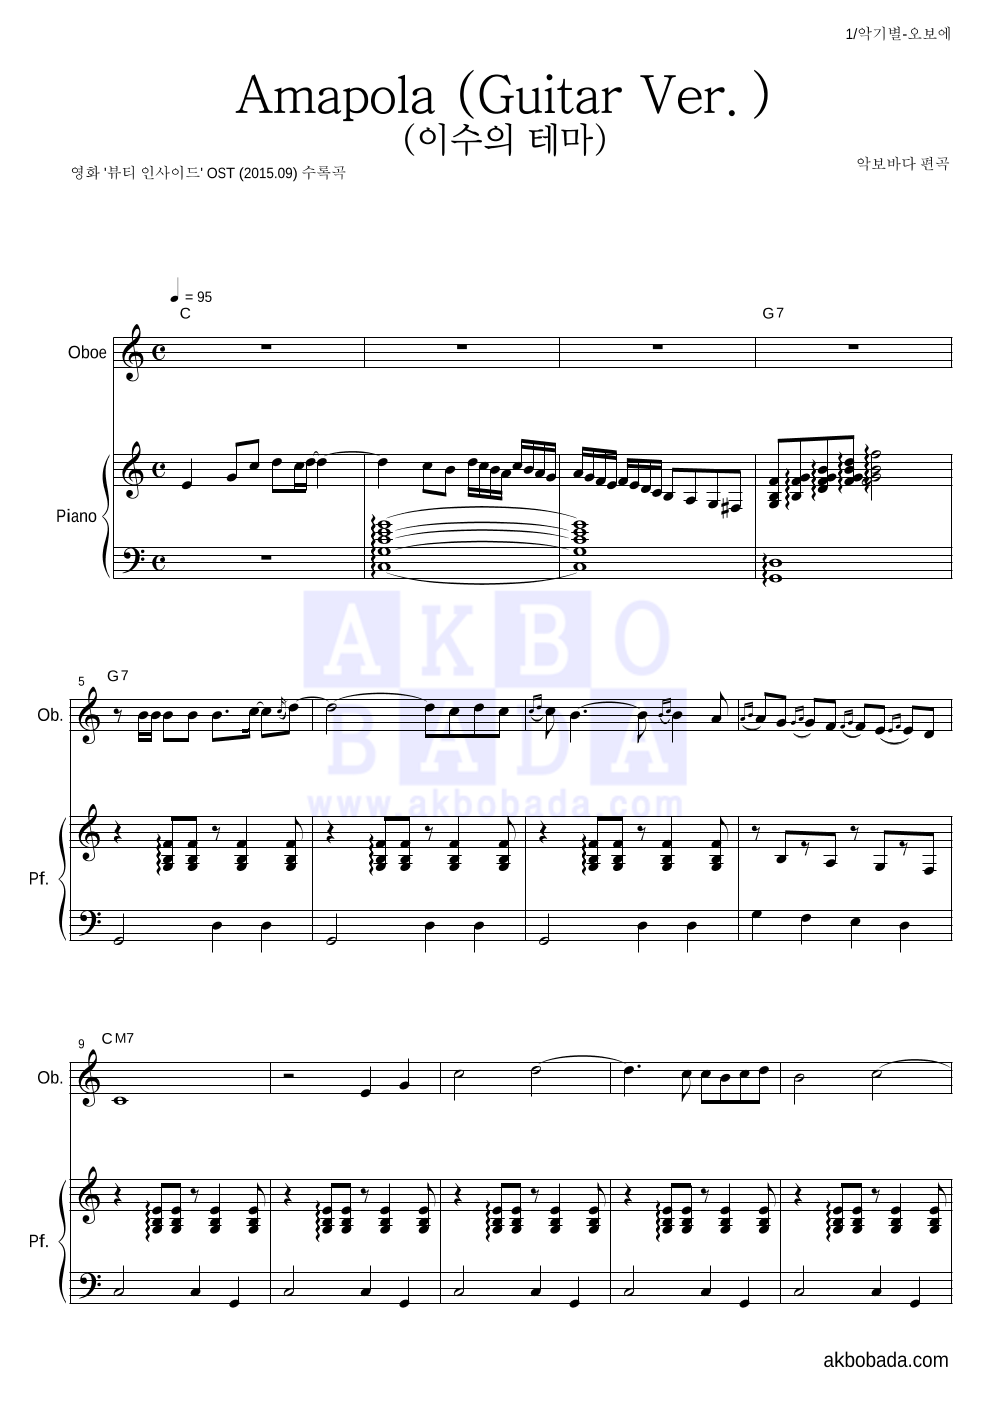 The Soundtrack Kings - Amapola (Guitar Ver.) (이수의 테마) 오보에&피아노 악보 